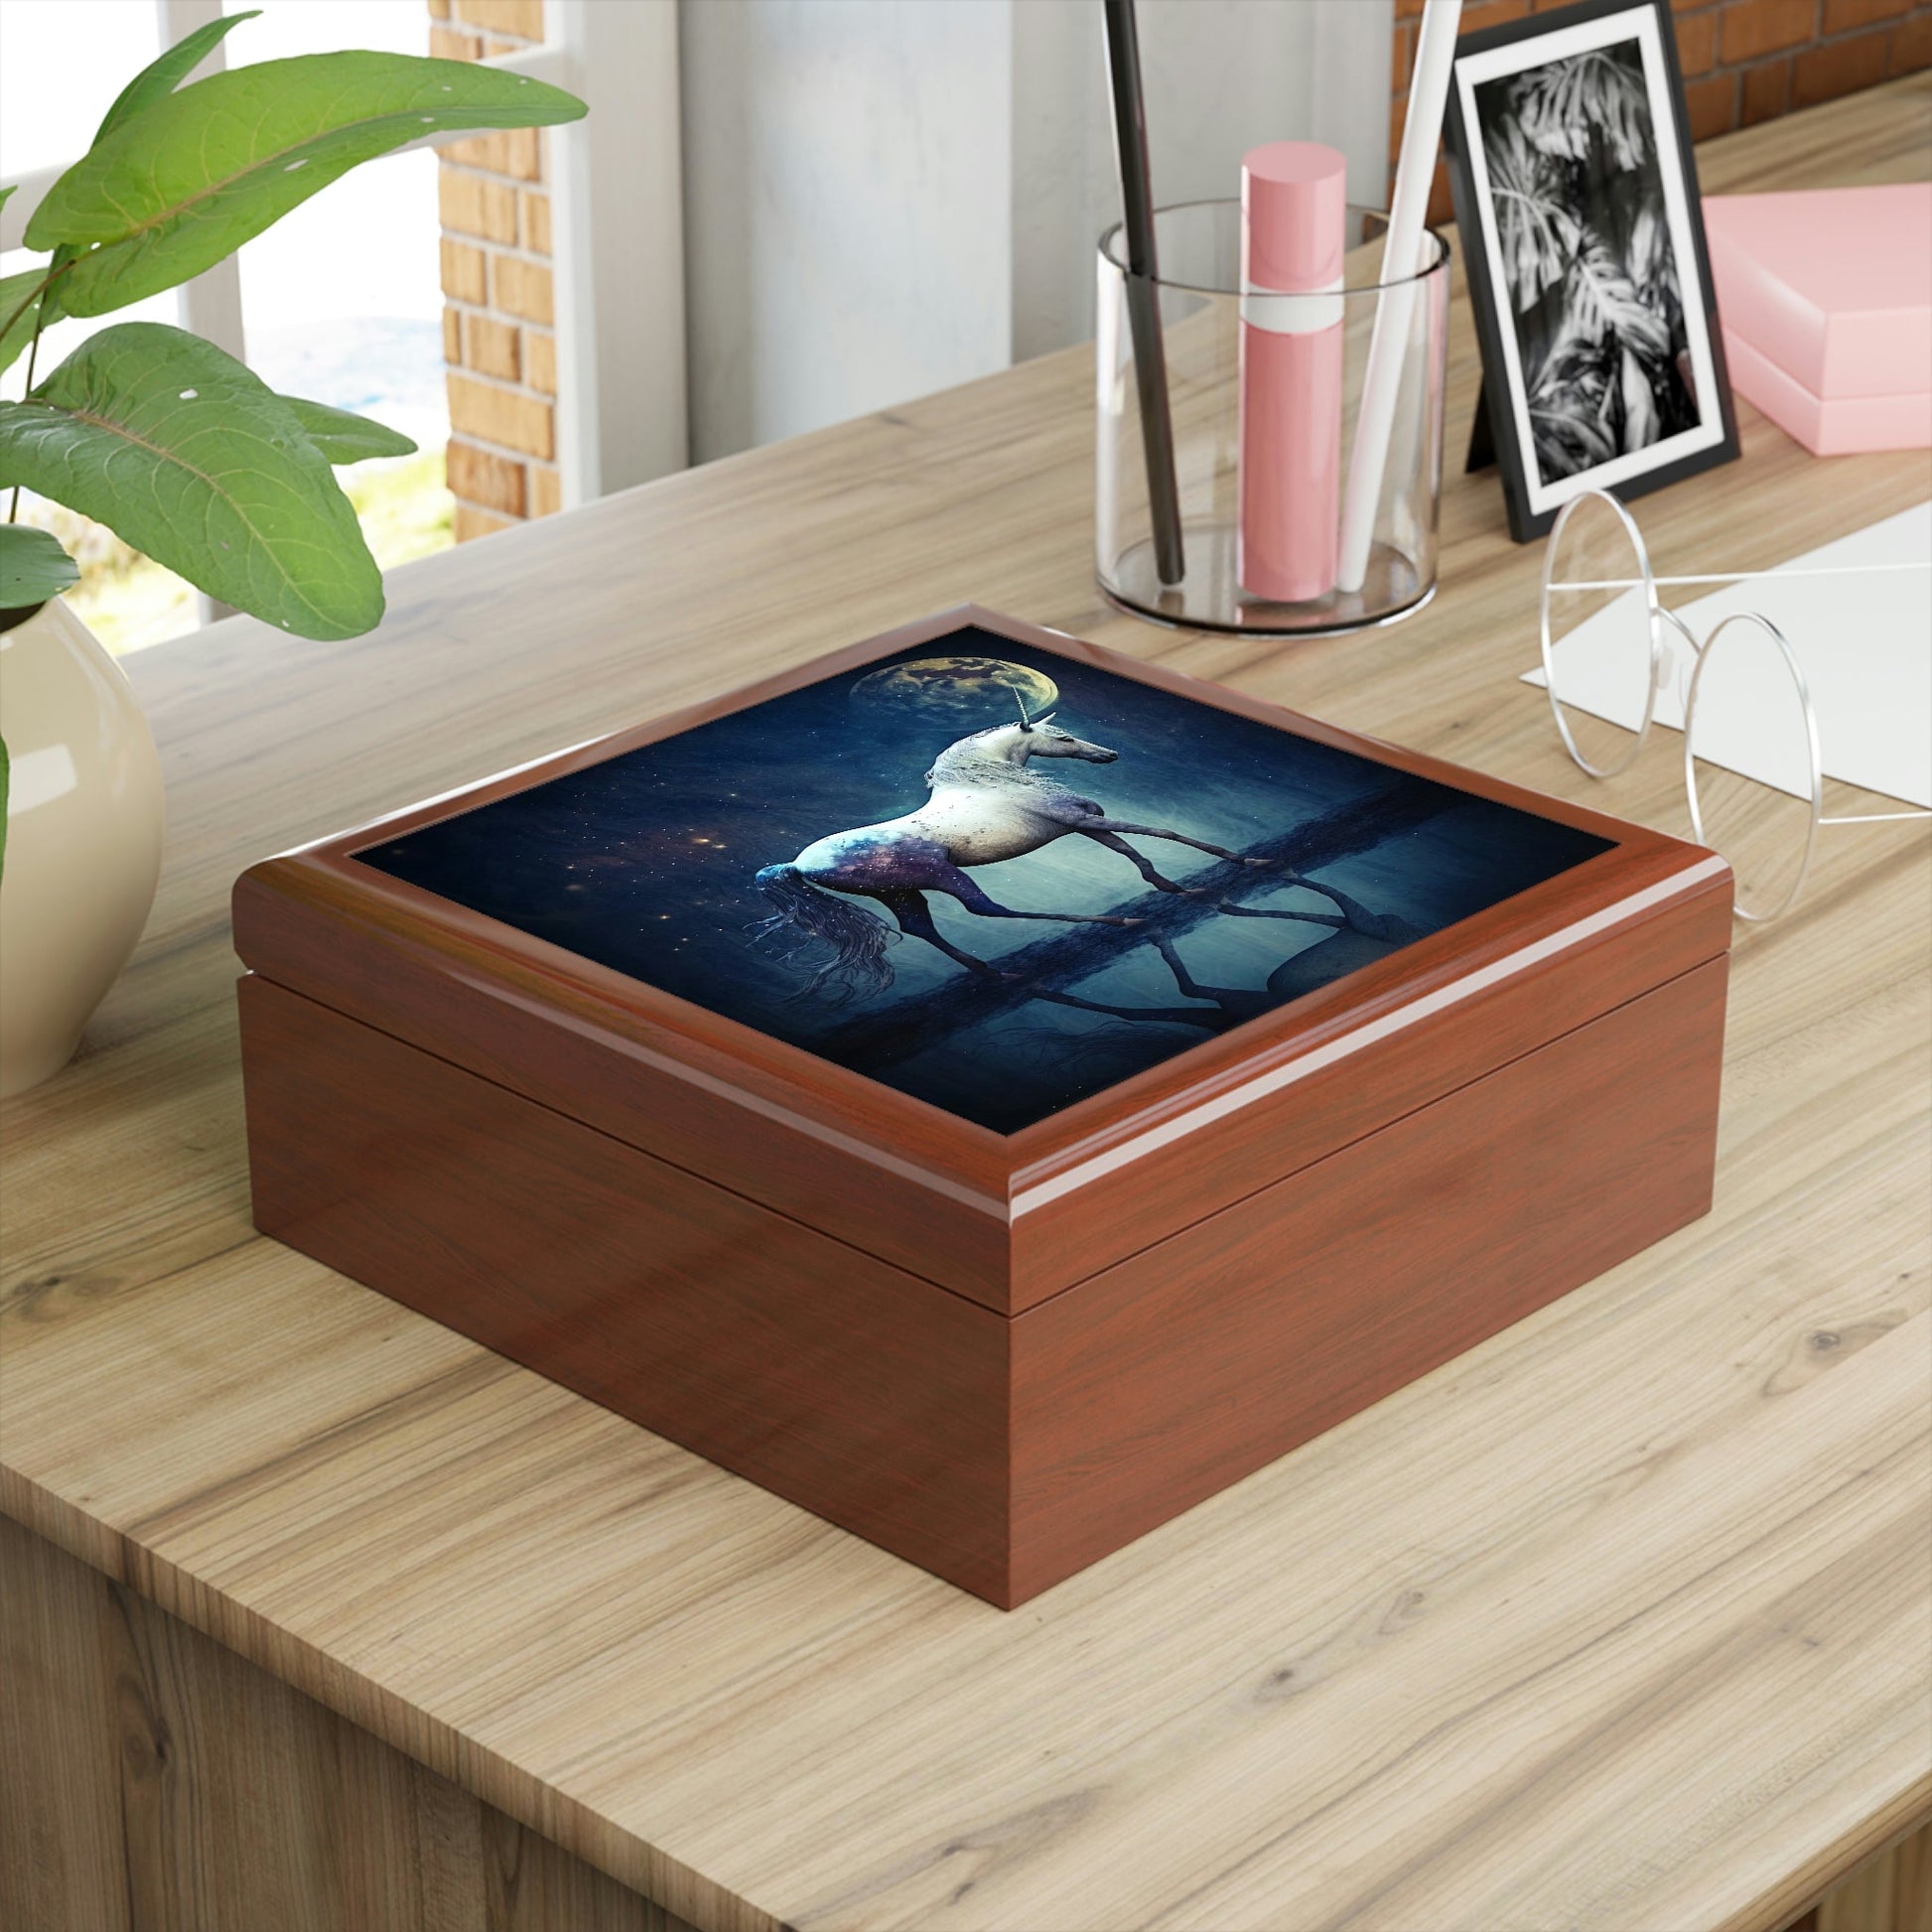 Midnight Unicorn Wooden Keepsake Jewelry Box with Ceramic Tile Cover